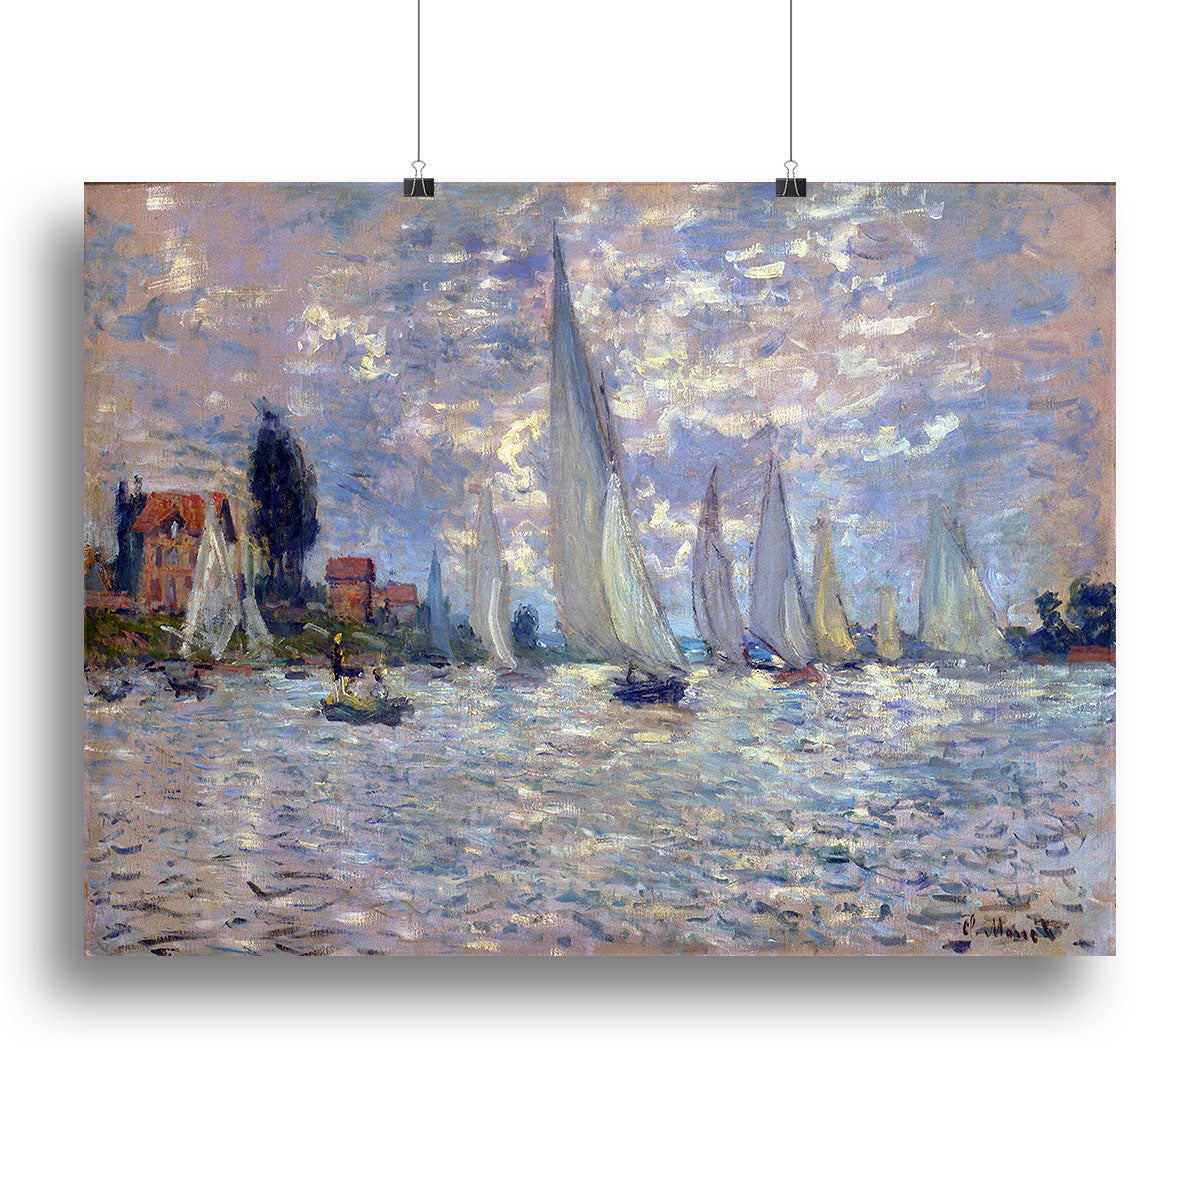 Les Barques by Monet Canvas Print or Poster - Canvas Art Rocks - 2